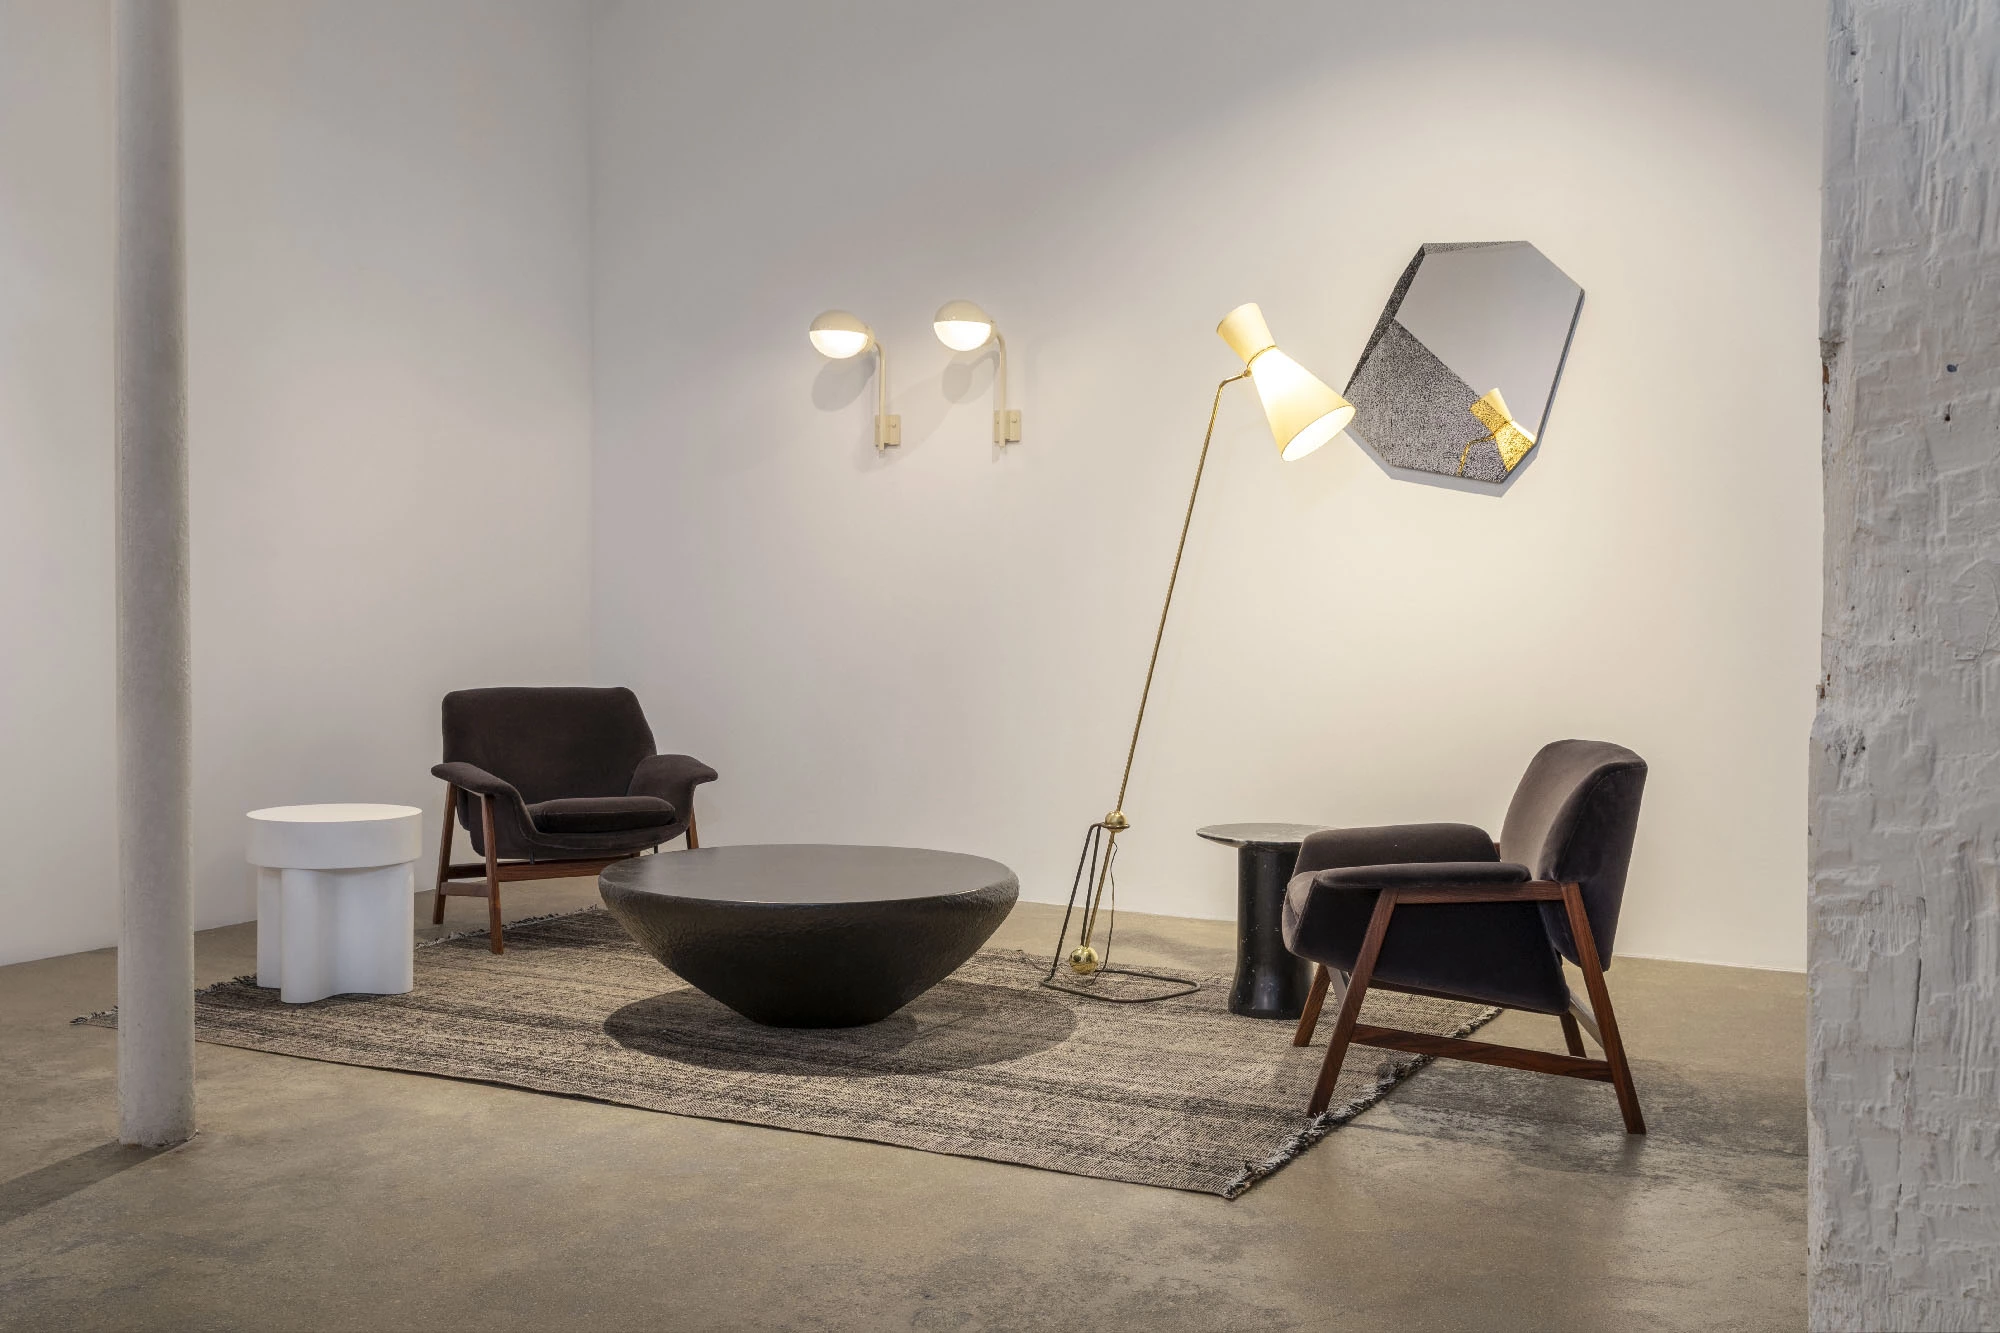 2 armchairs model n°849 and 1 ottoman n°849/S (brown) - Gianfranco Frattini - Seating - Galerie kreo